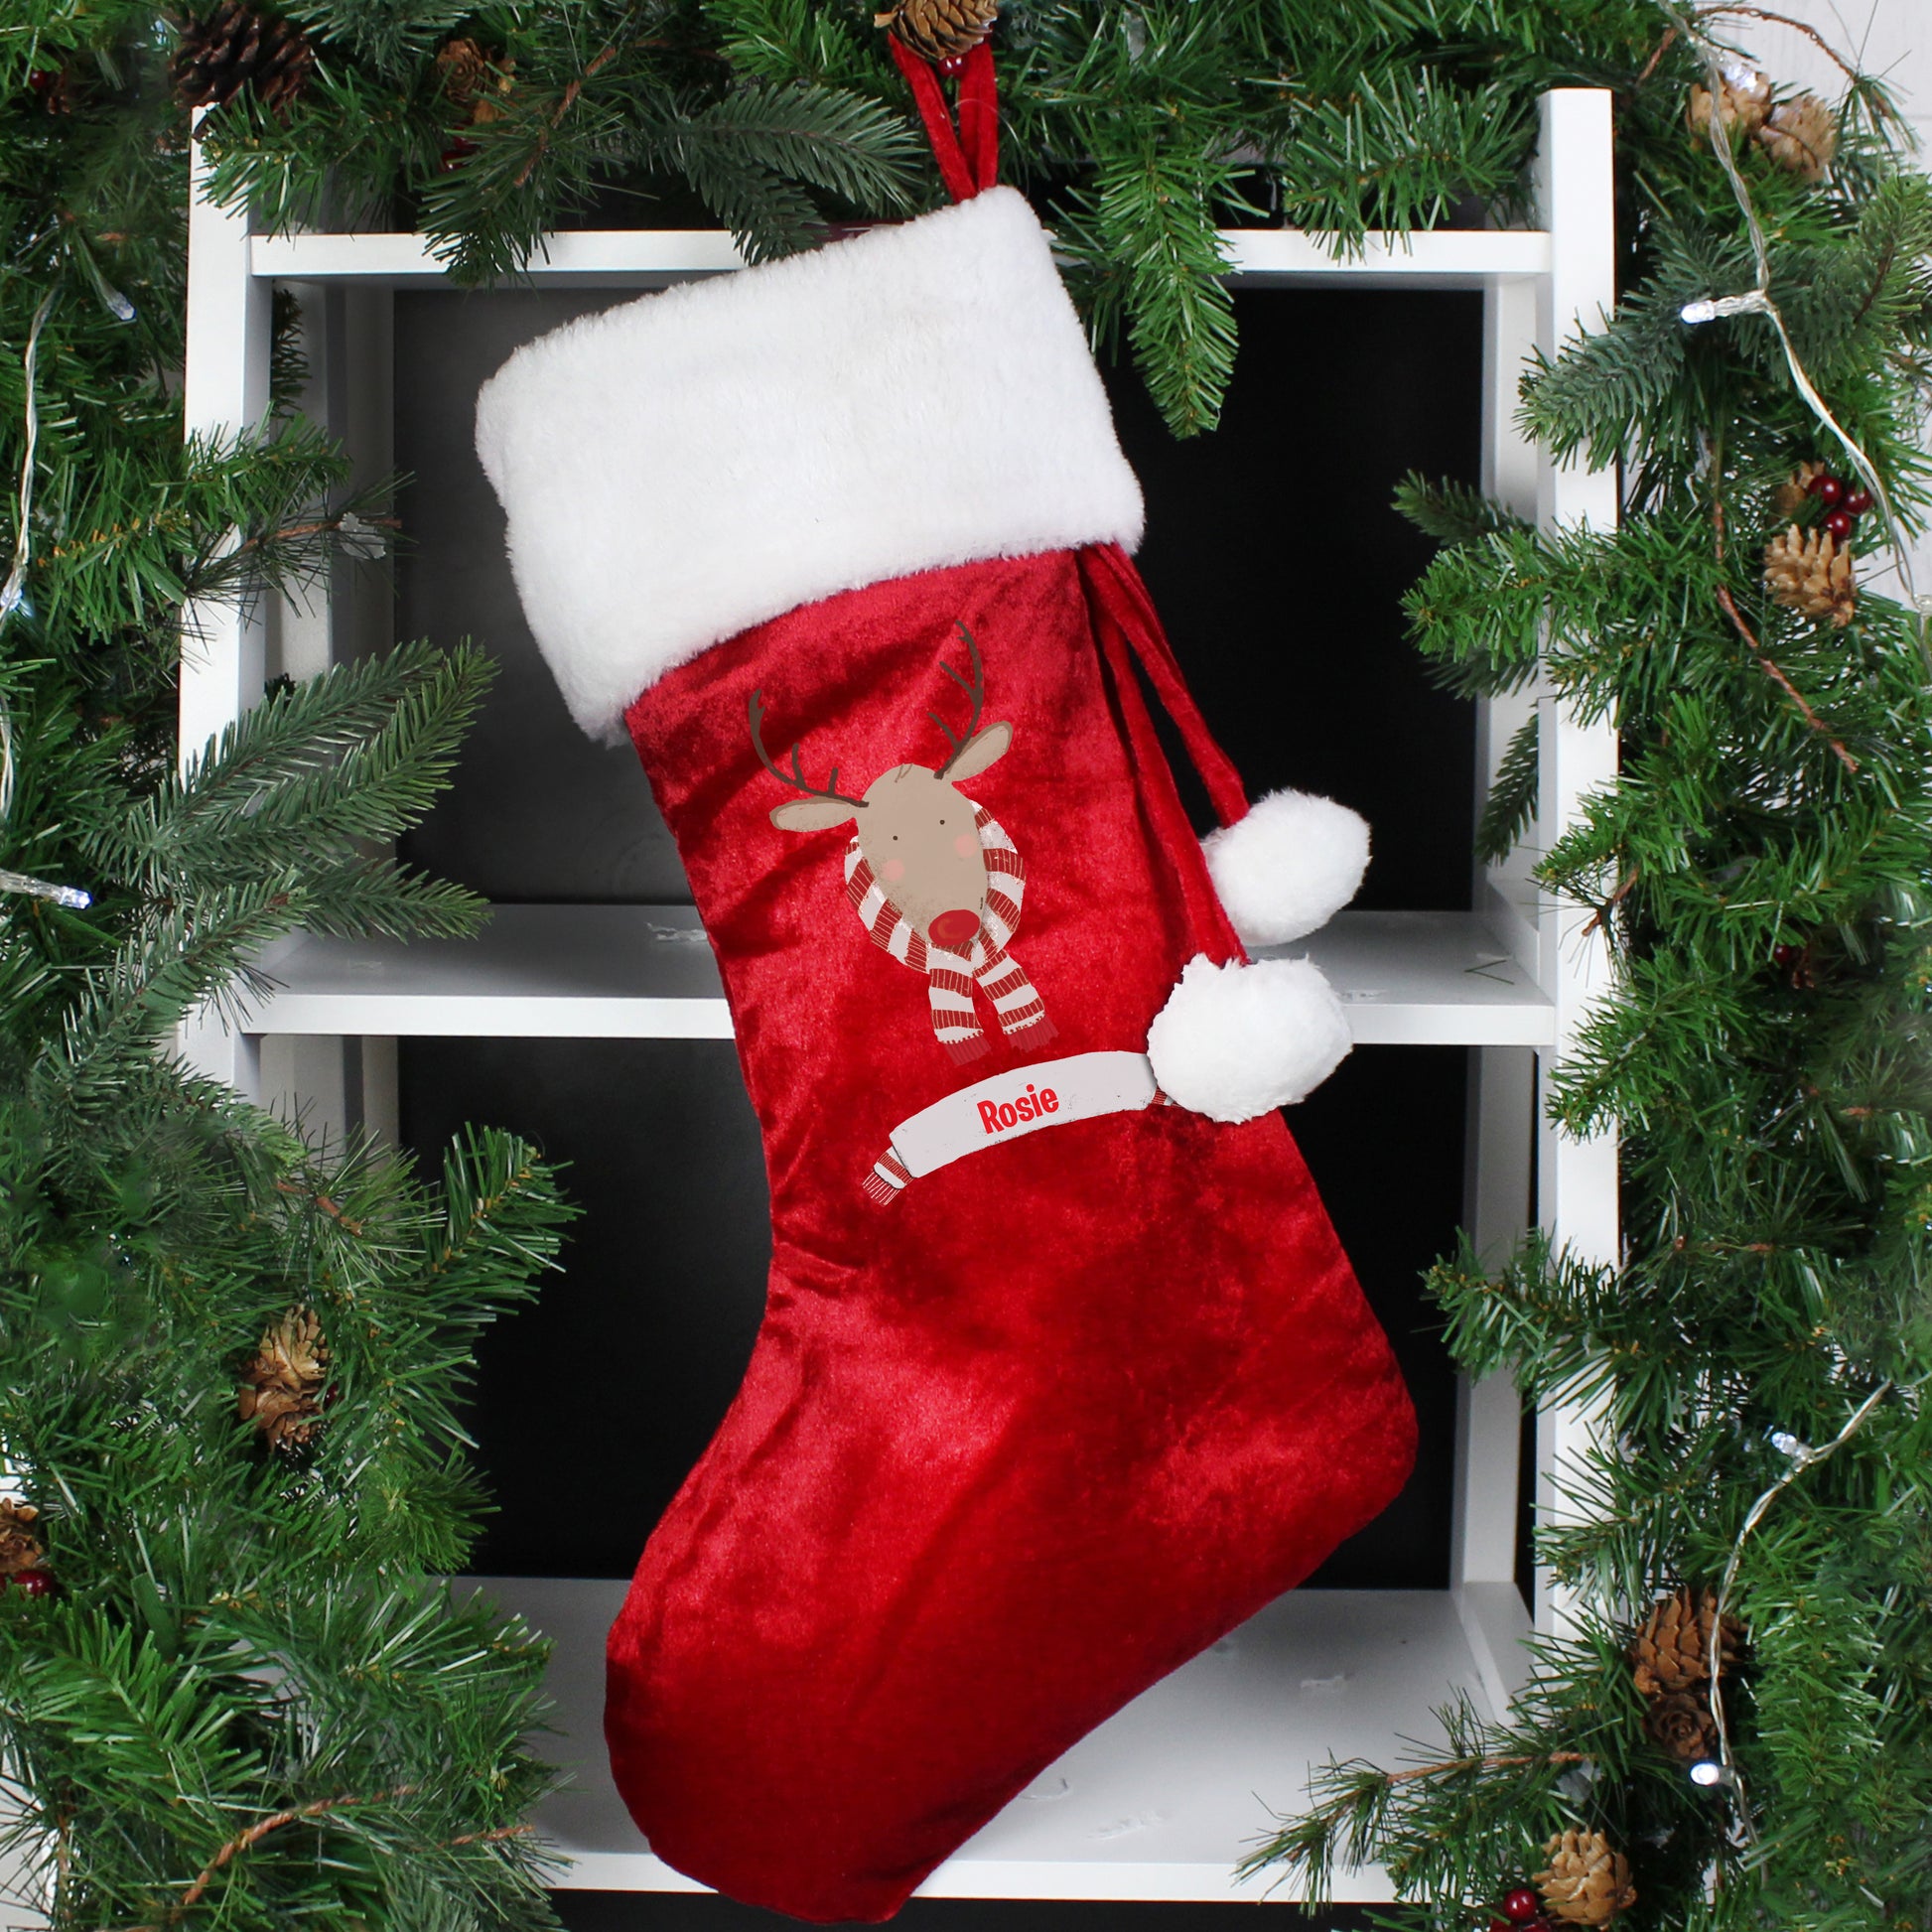 Retro reindeer luxury red stocking - Lilybet loves